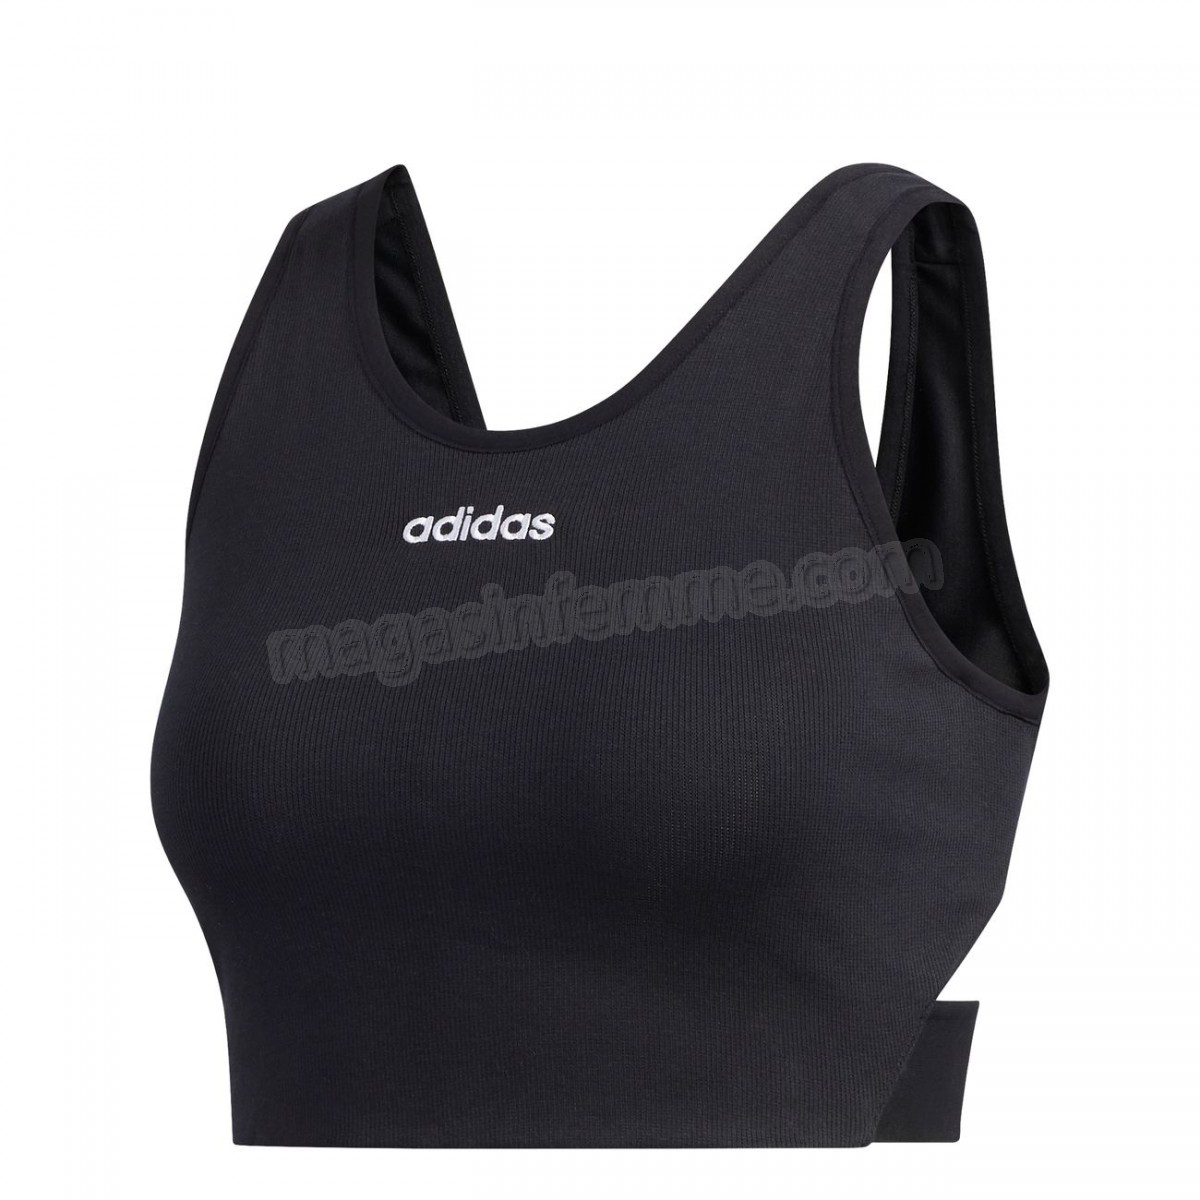 Adidas-Fitness femme ADIDAS Brassière adidas Core Training en solde - -1